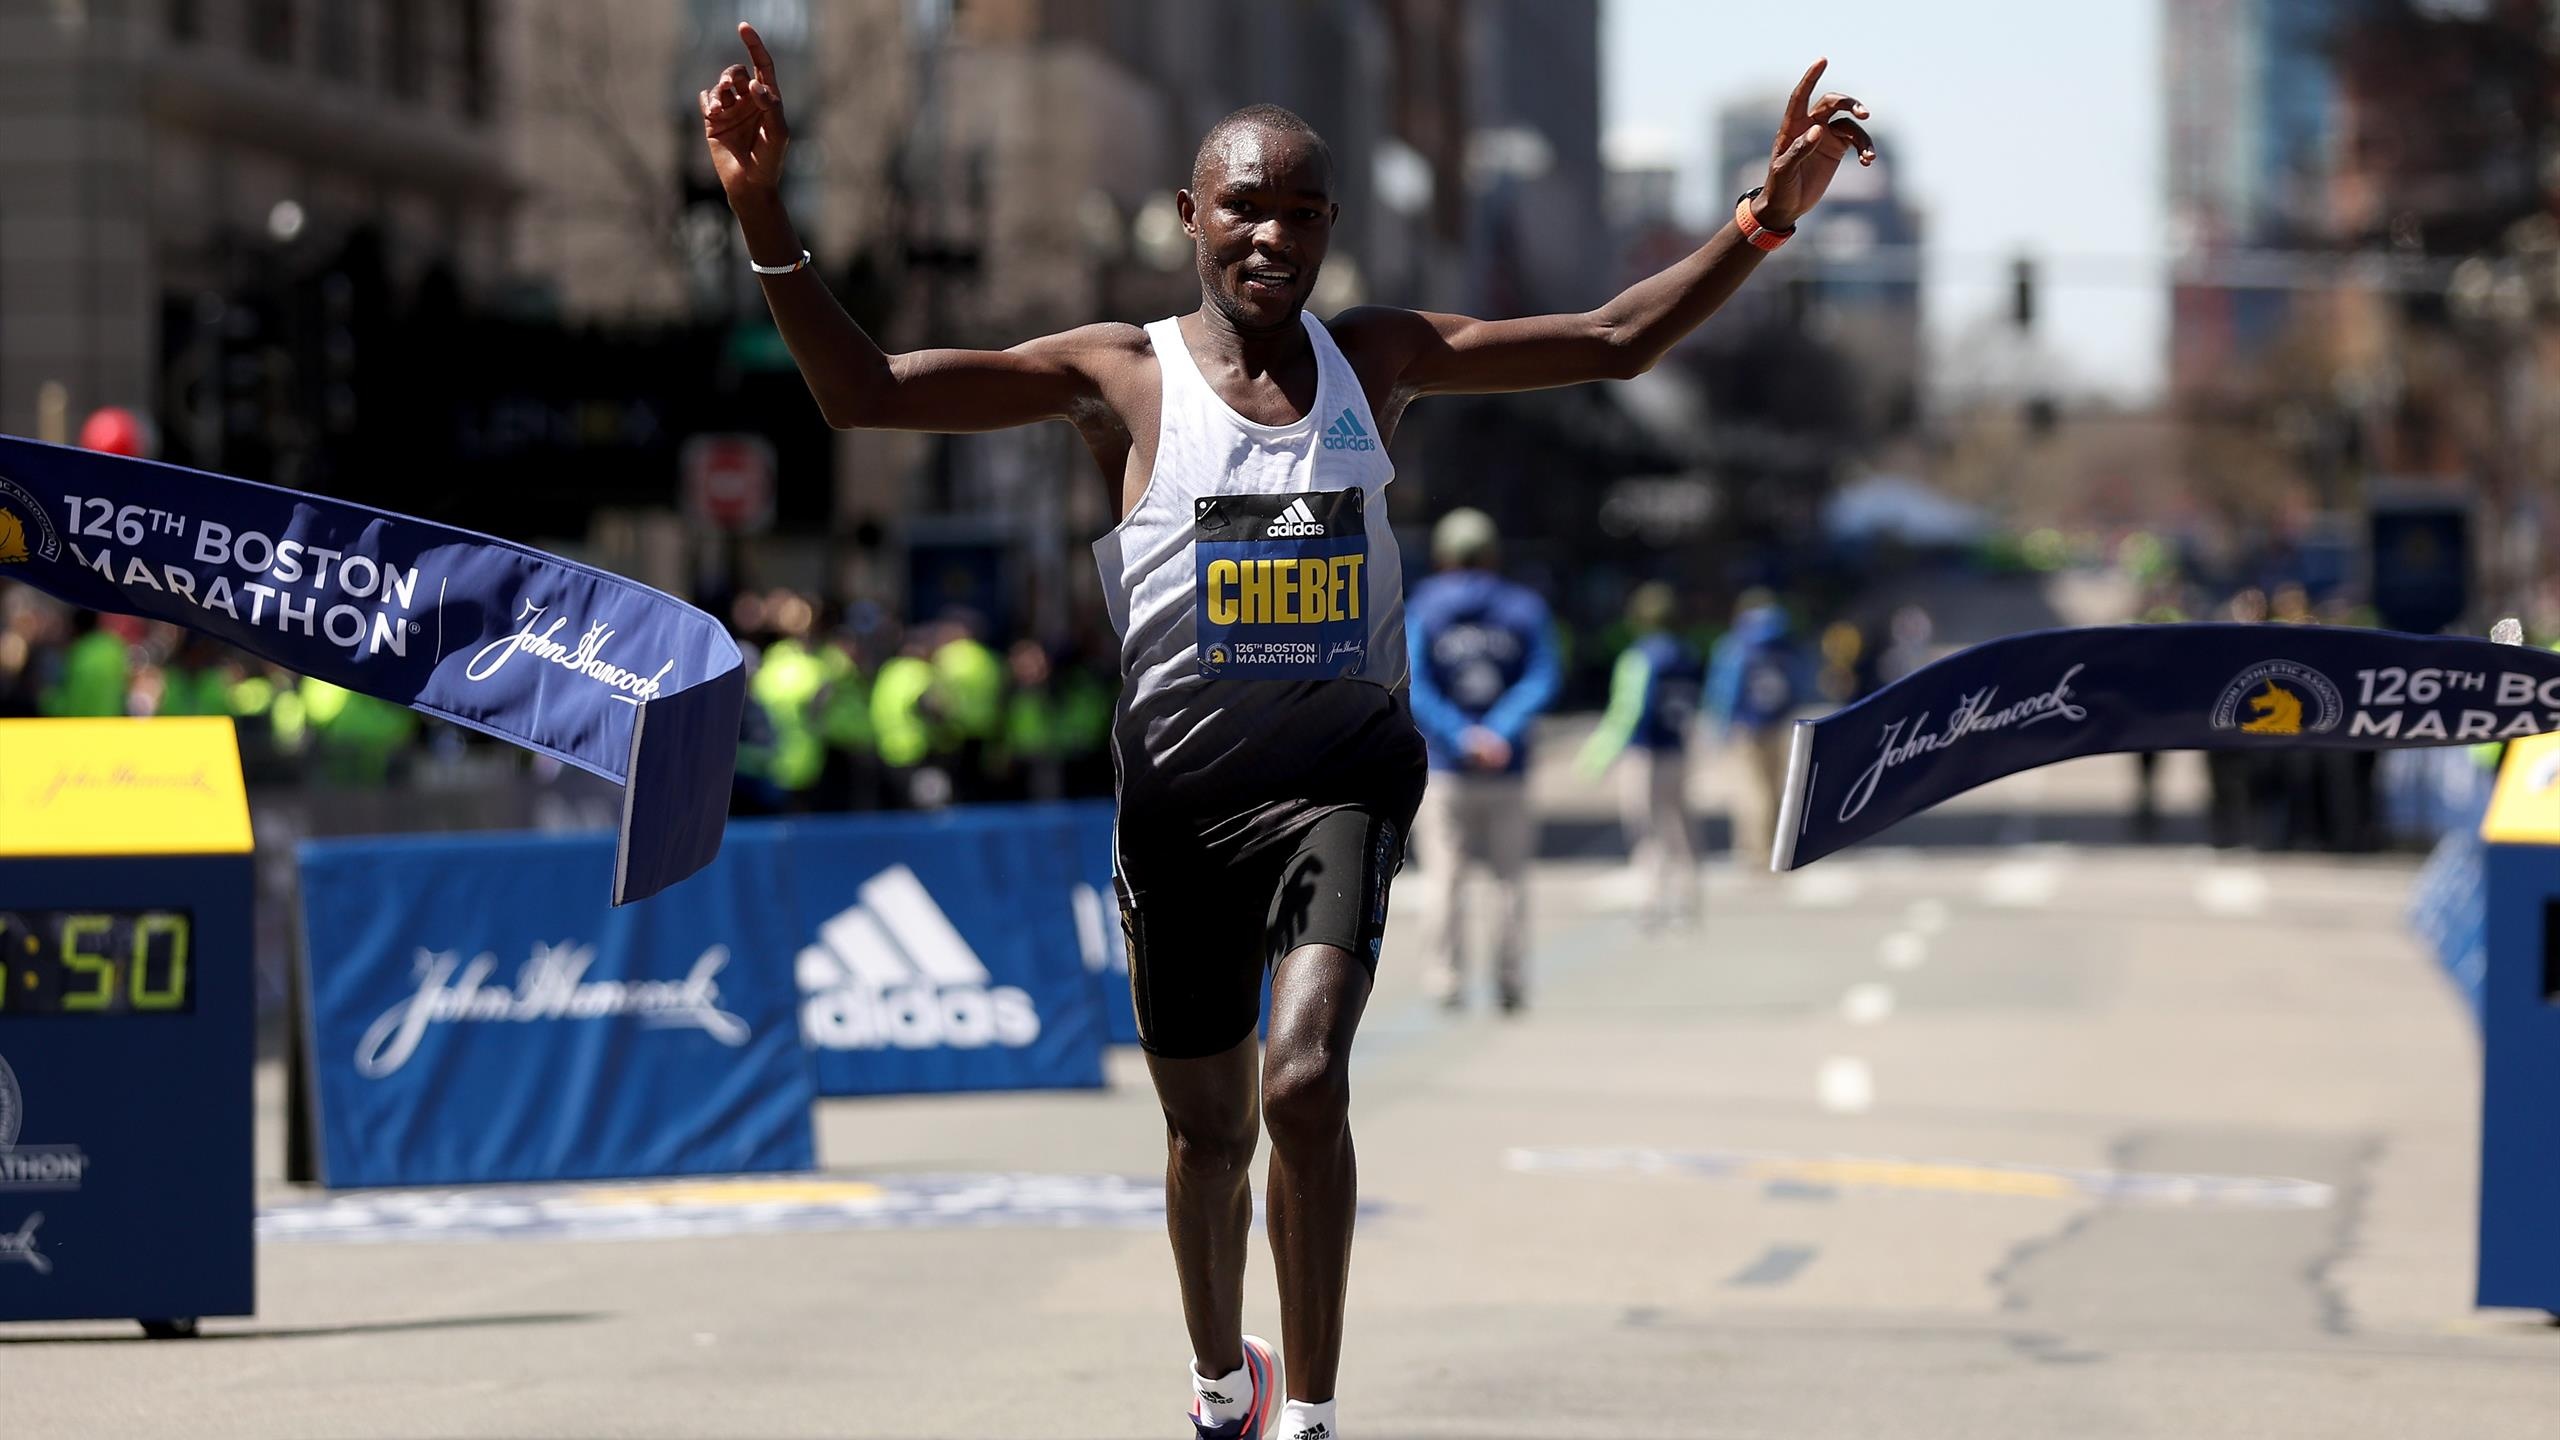 Marathon: Evans Chebet's triumph, 126th Boston Marathon, A long-distance running event, Peres Jepchirchir's competitor. 2560x1440 HD Background.